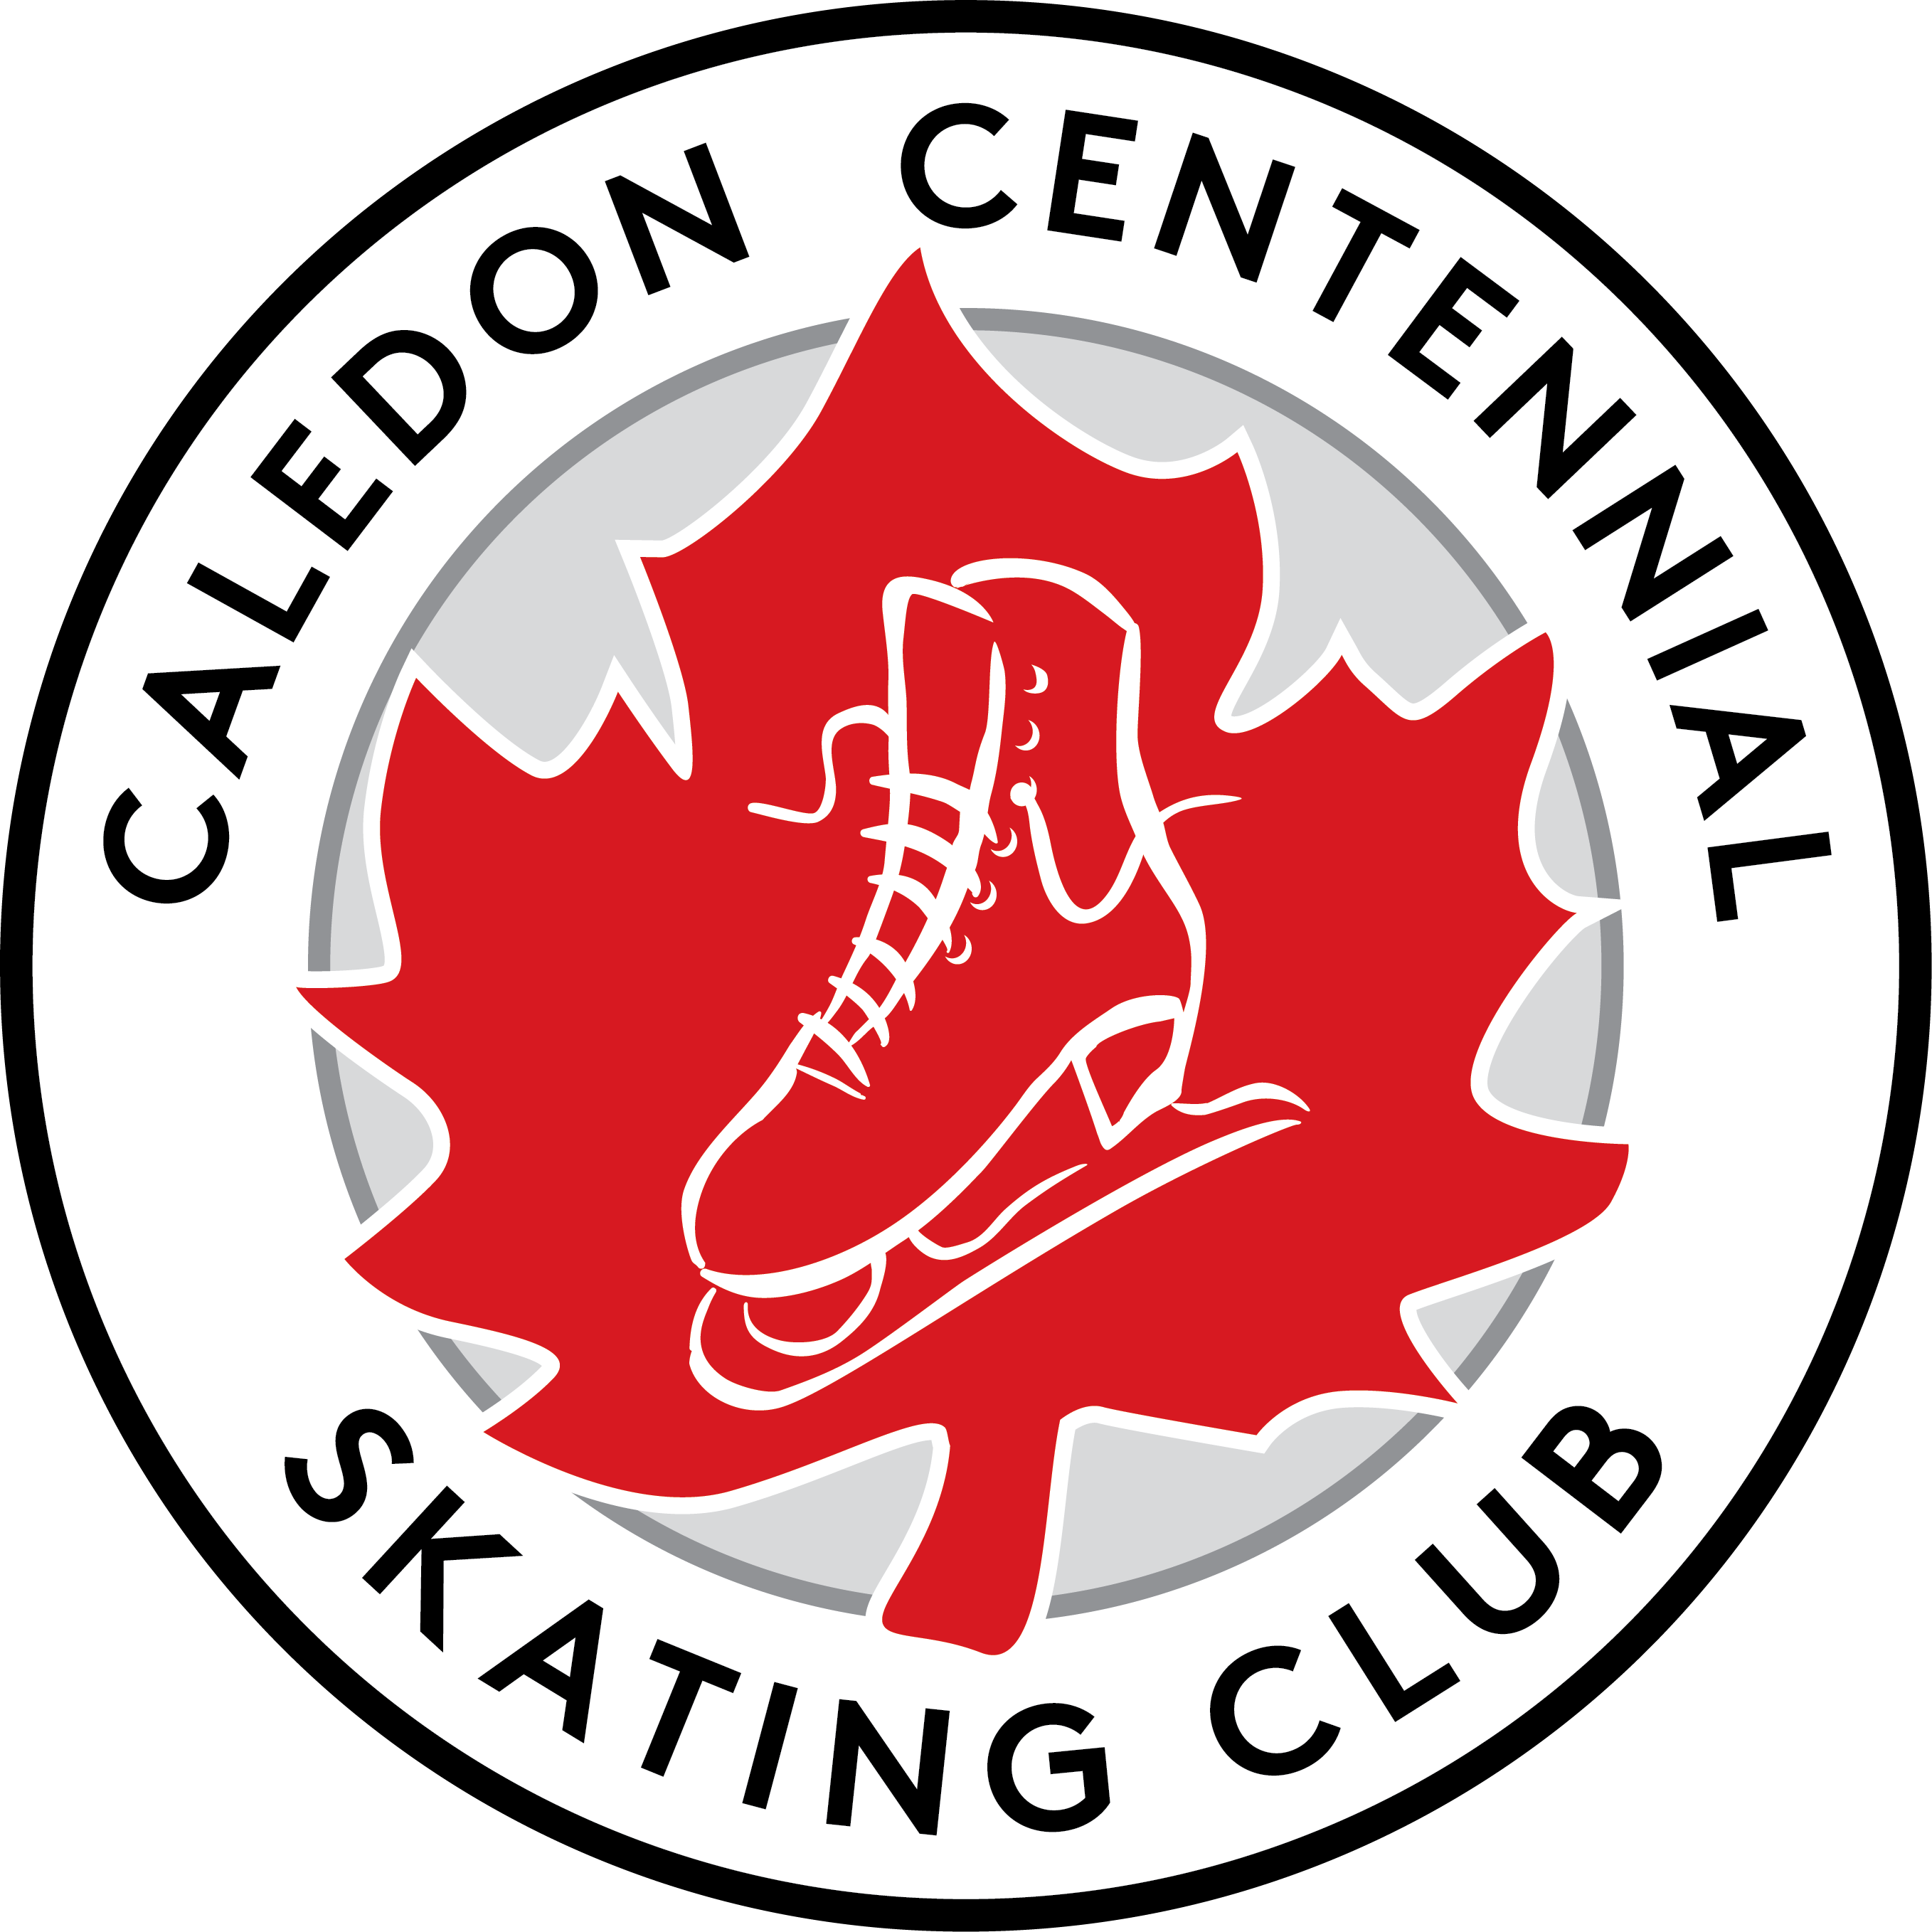 Caledon Centennial Skating Club